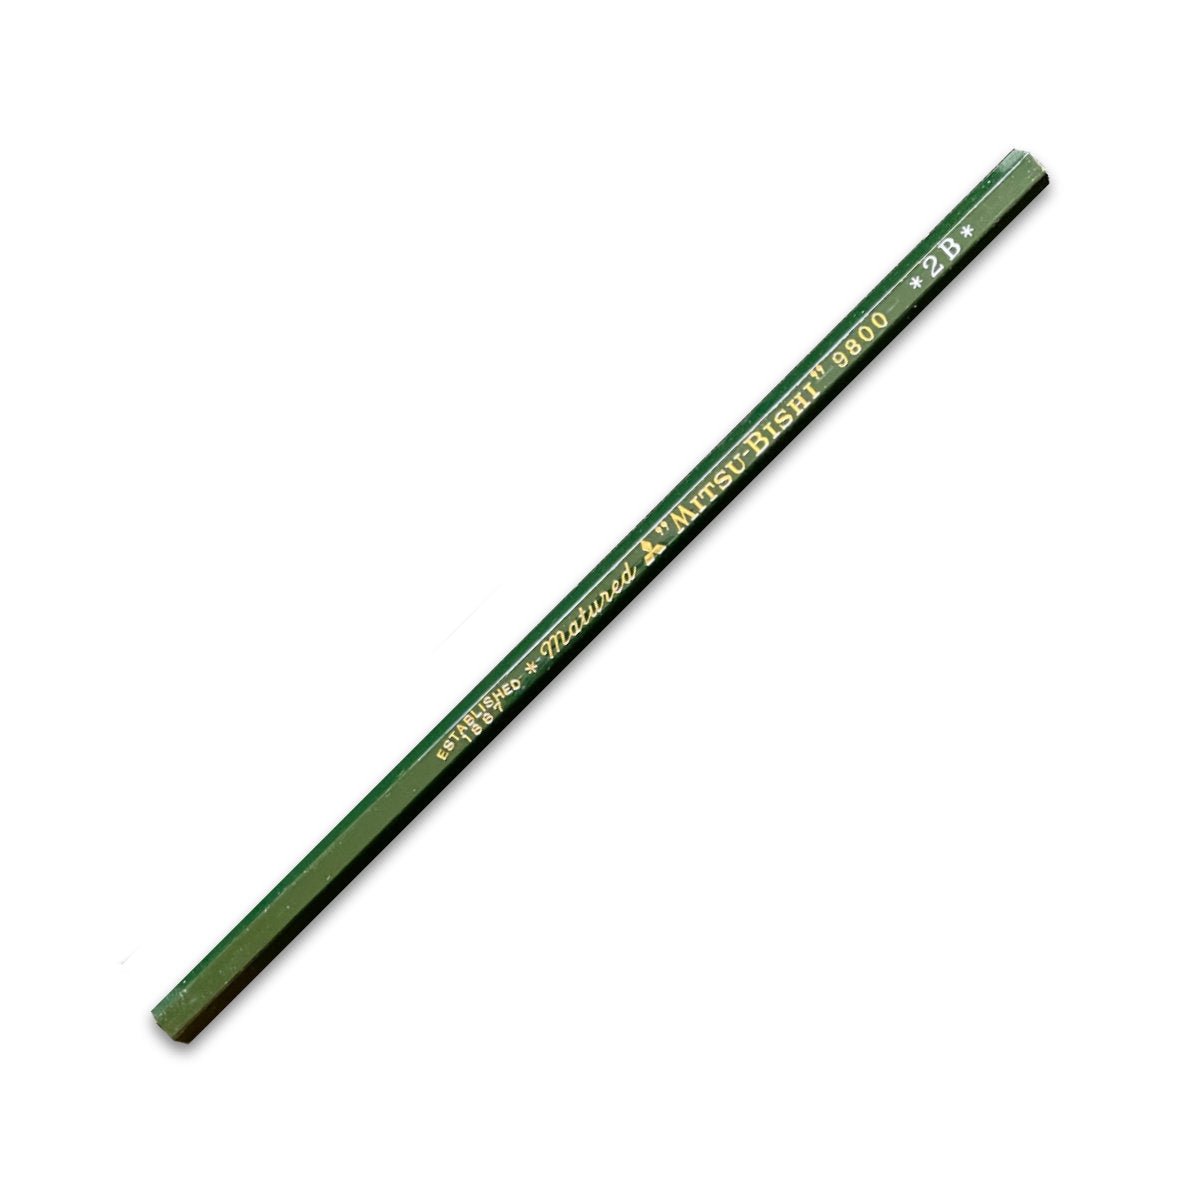 Mitsubishi 9800 - Single Pencil - 2B - Notegeist